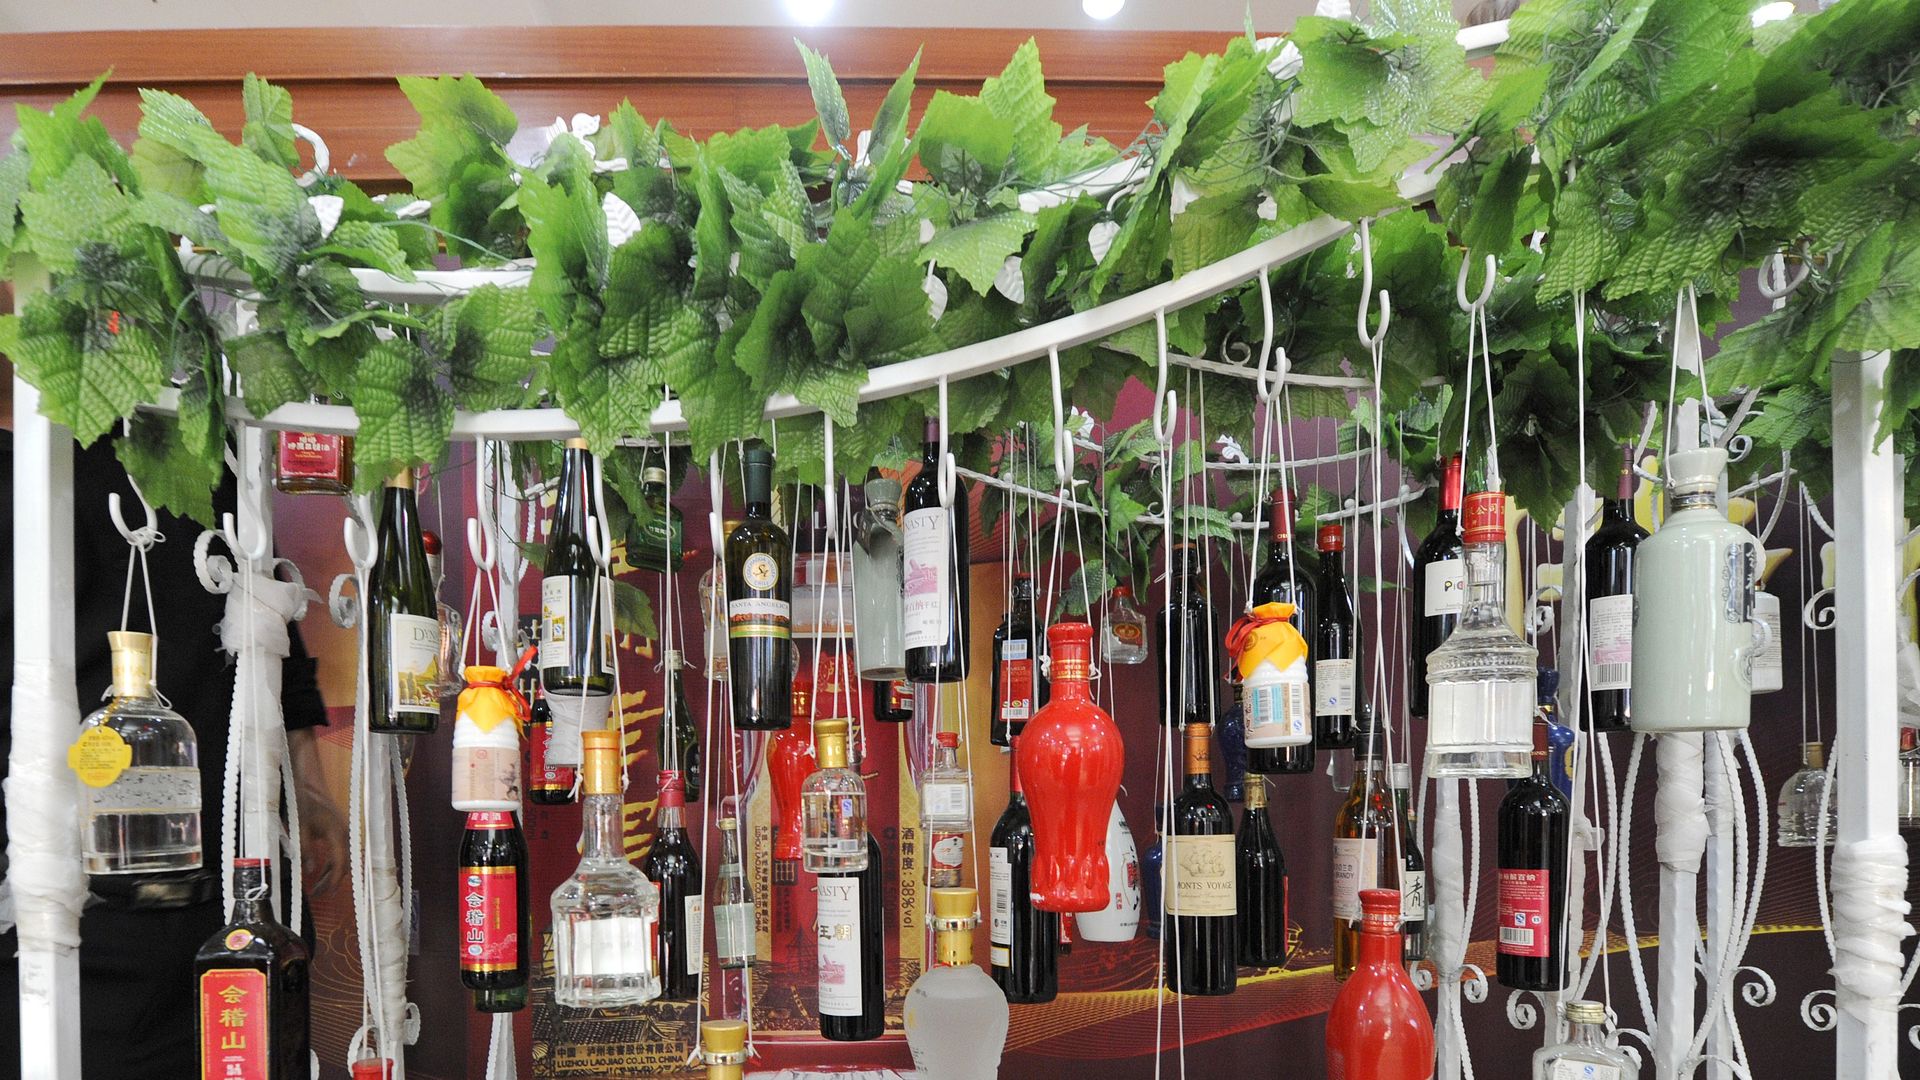 Liquor bottles hanging from strings outside a store